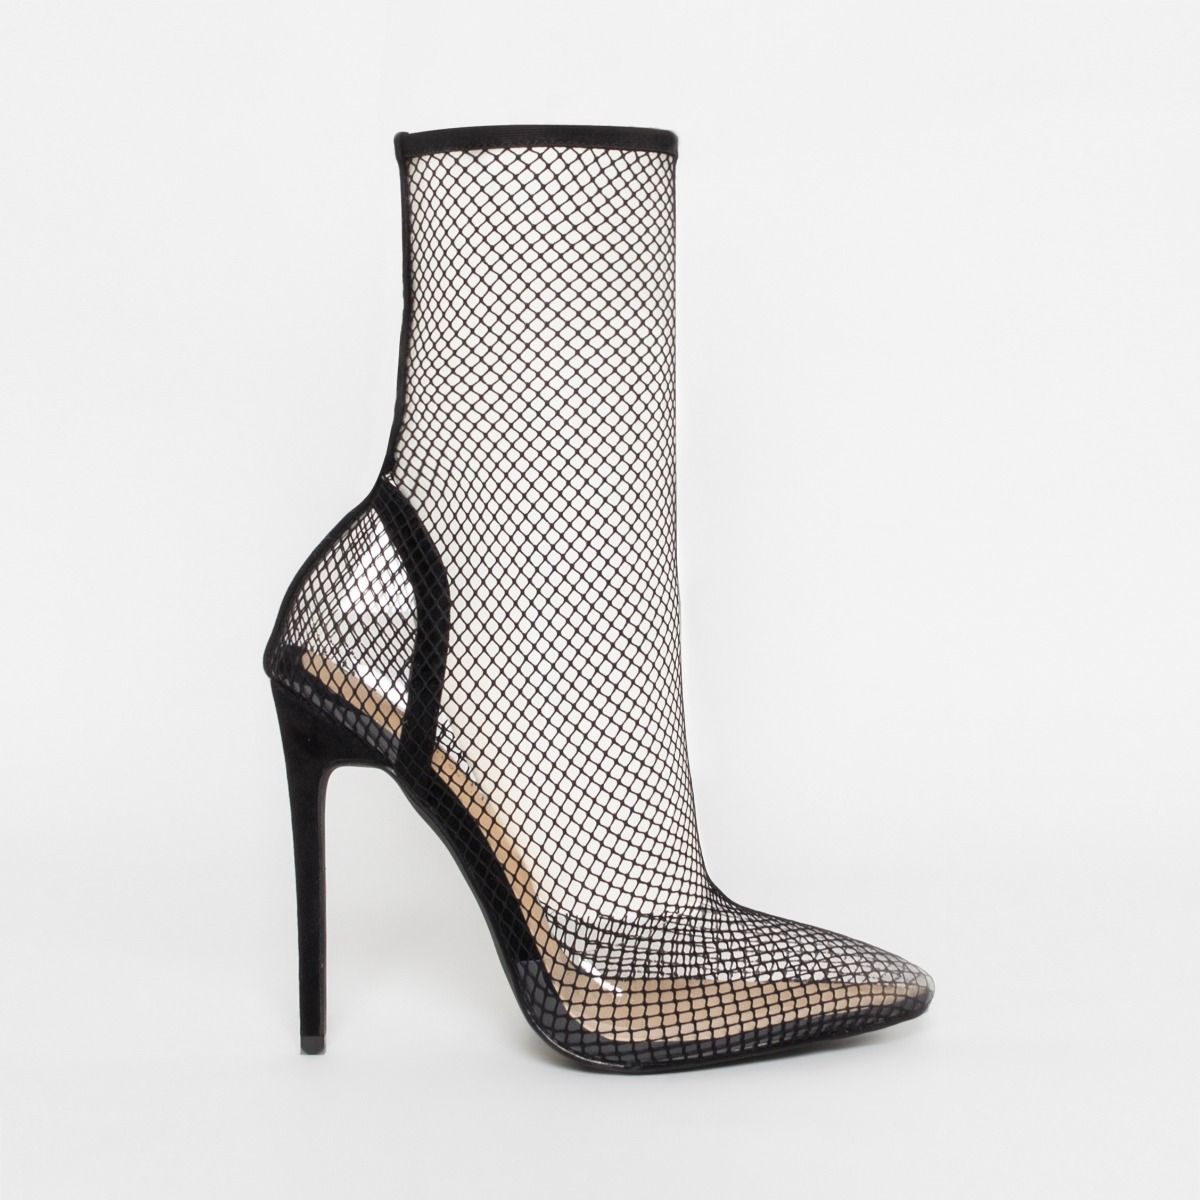 fishnet heels